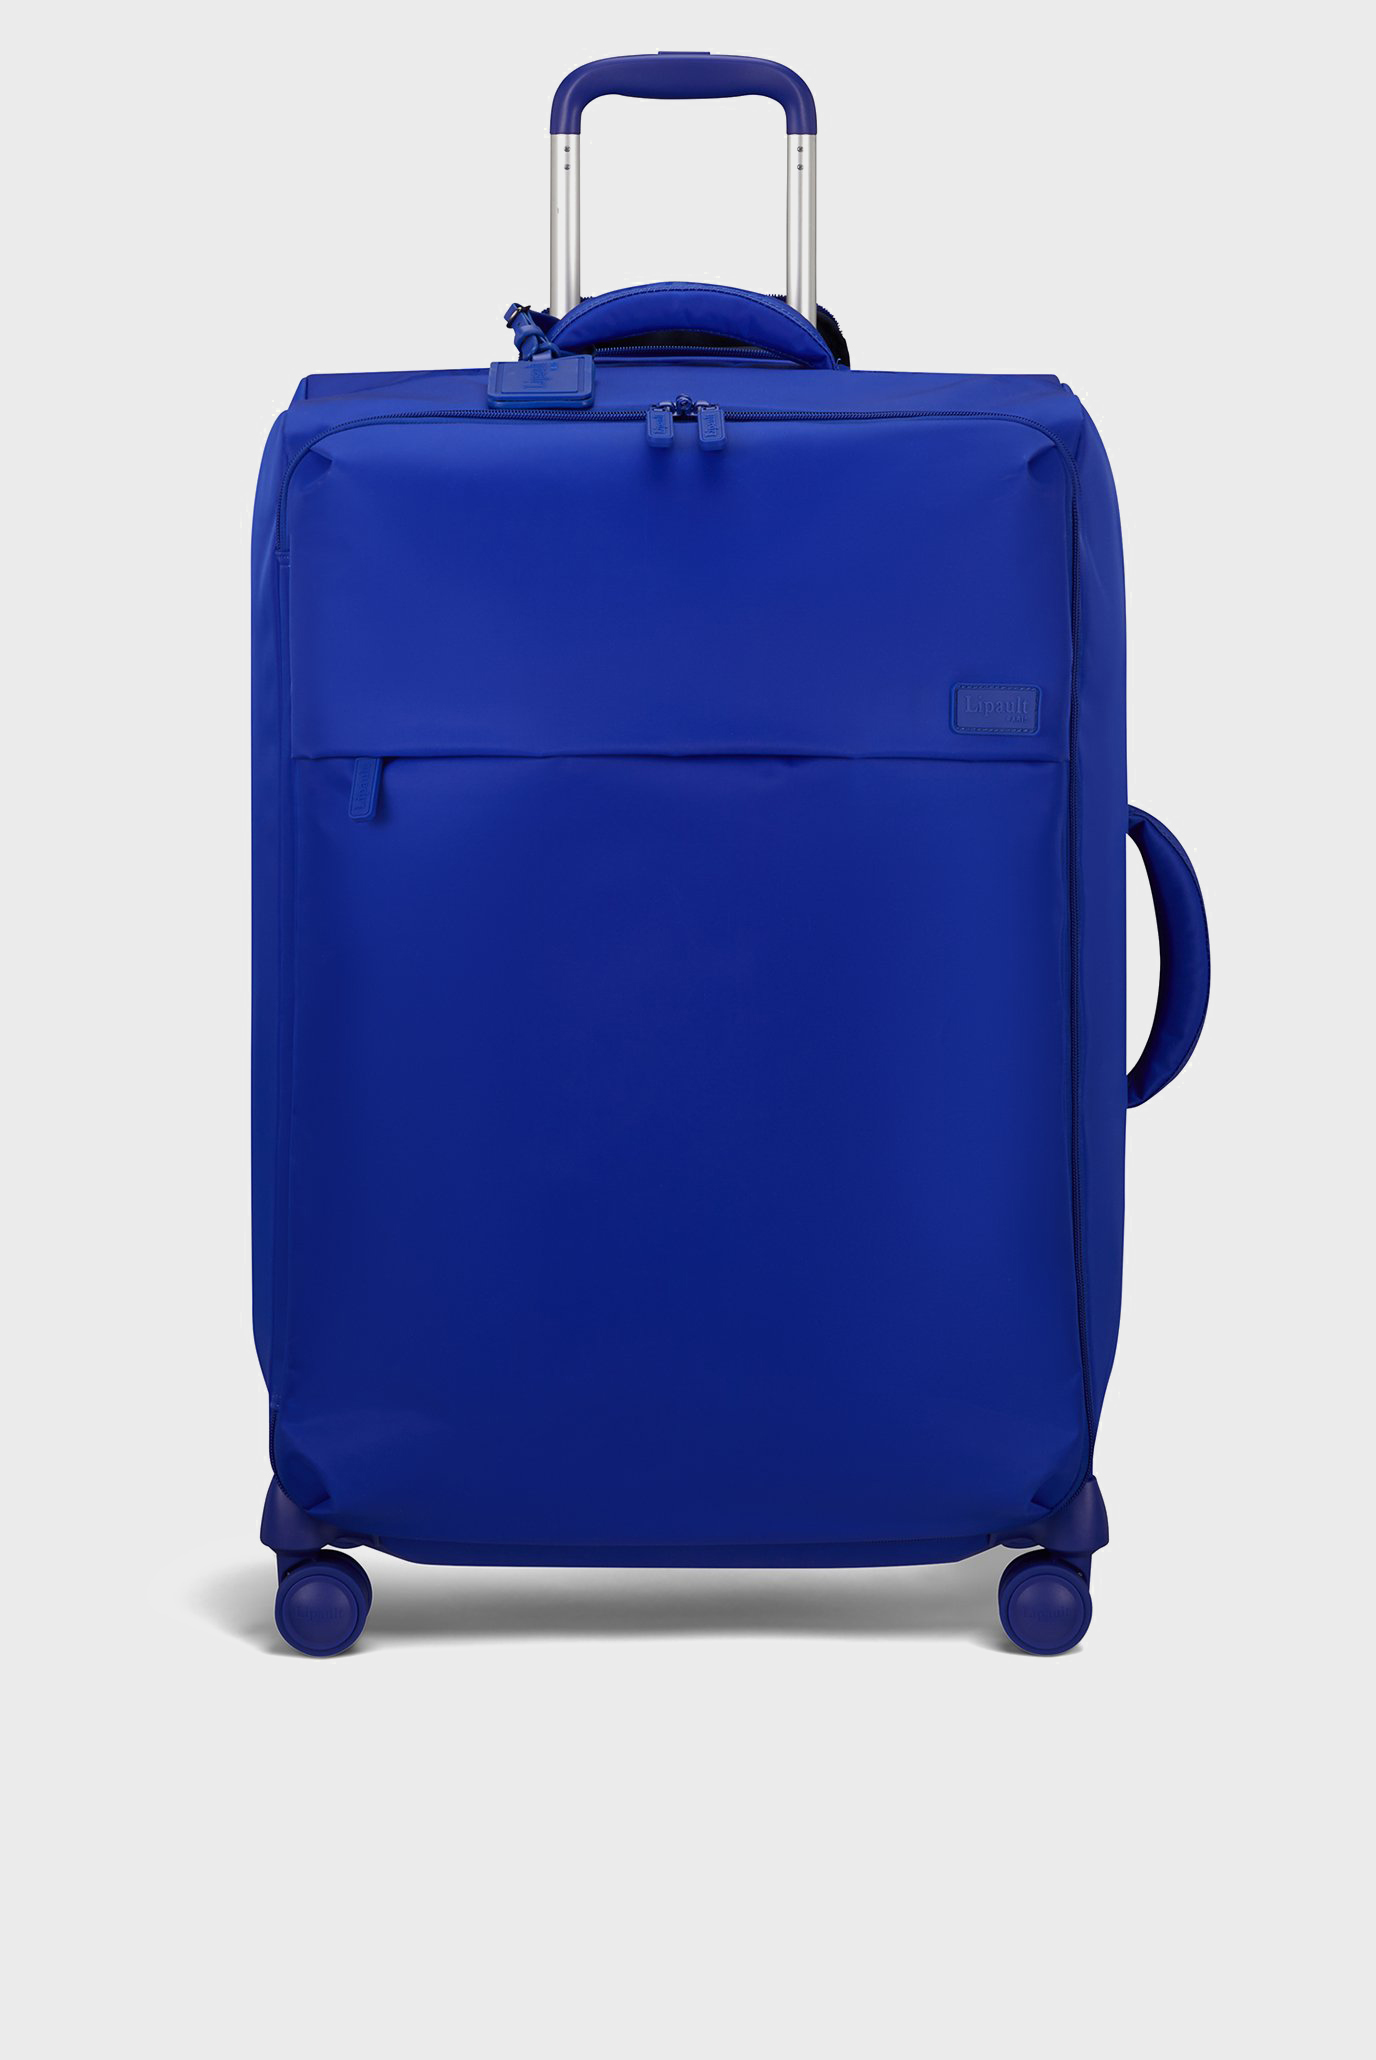 Жіноча синя валіза 70 см PLUME MAGNETIC BLUE 1